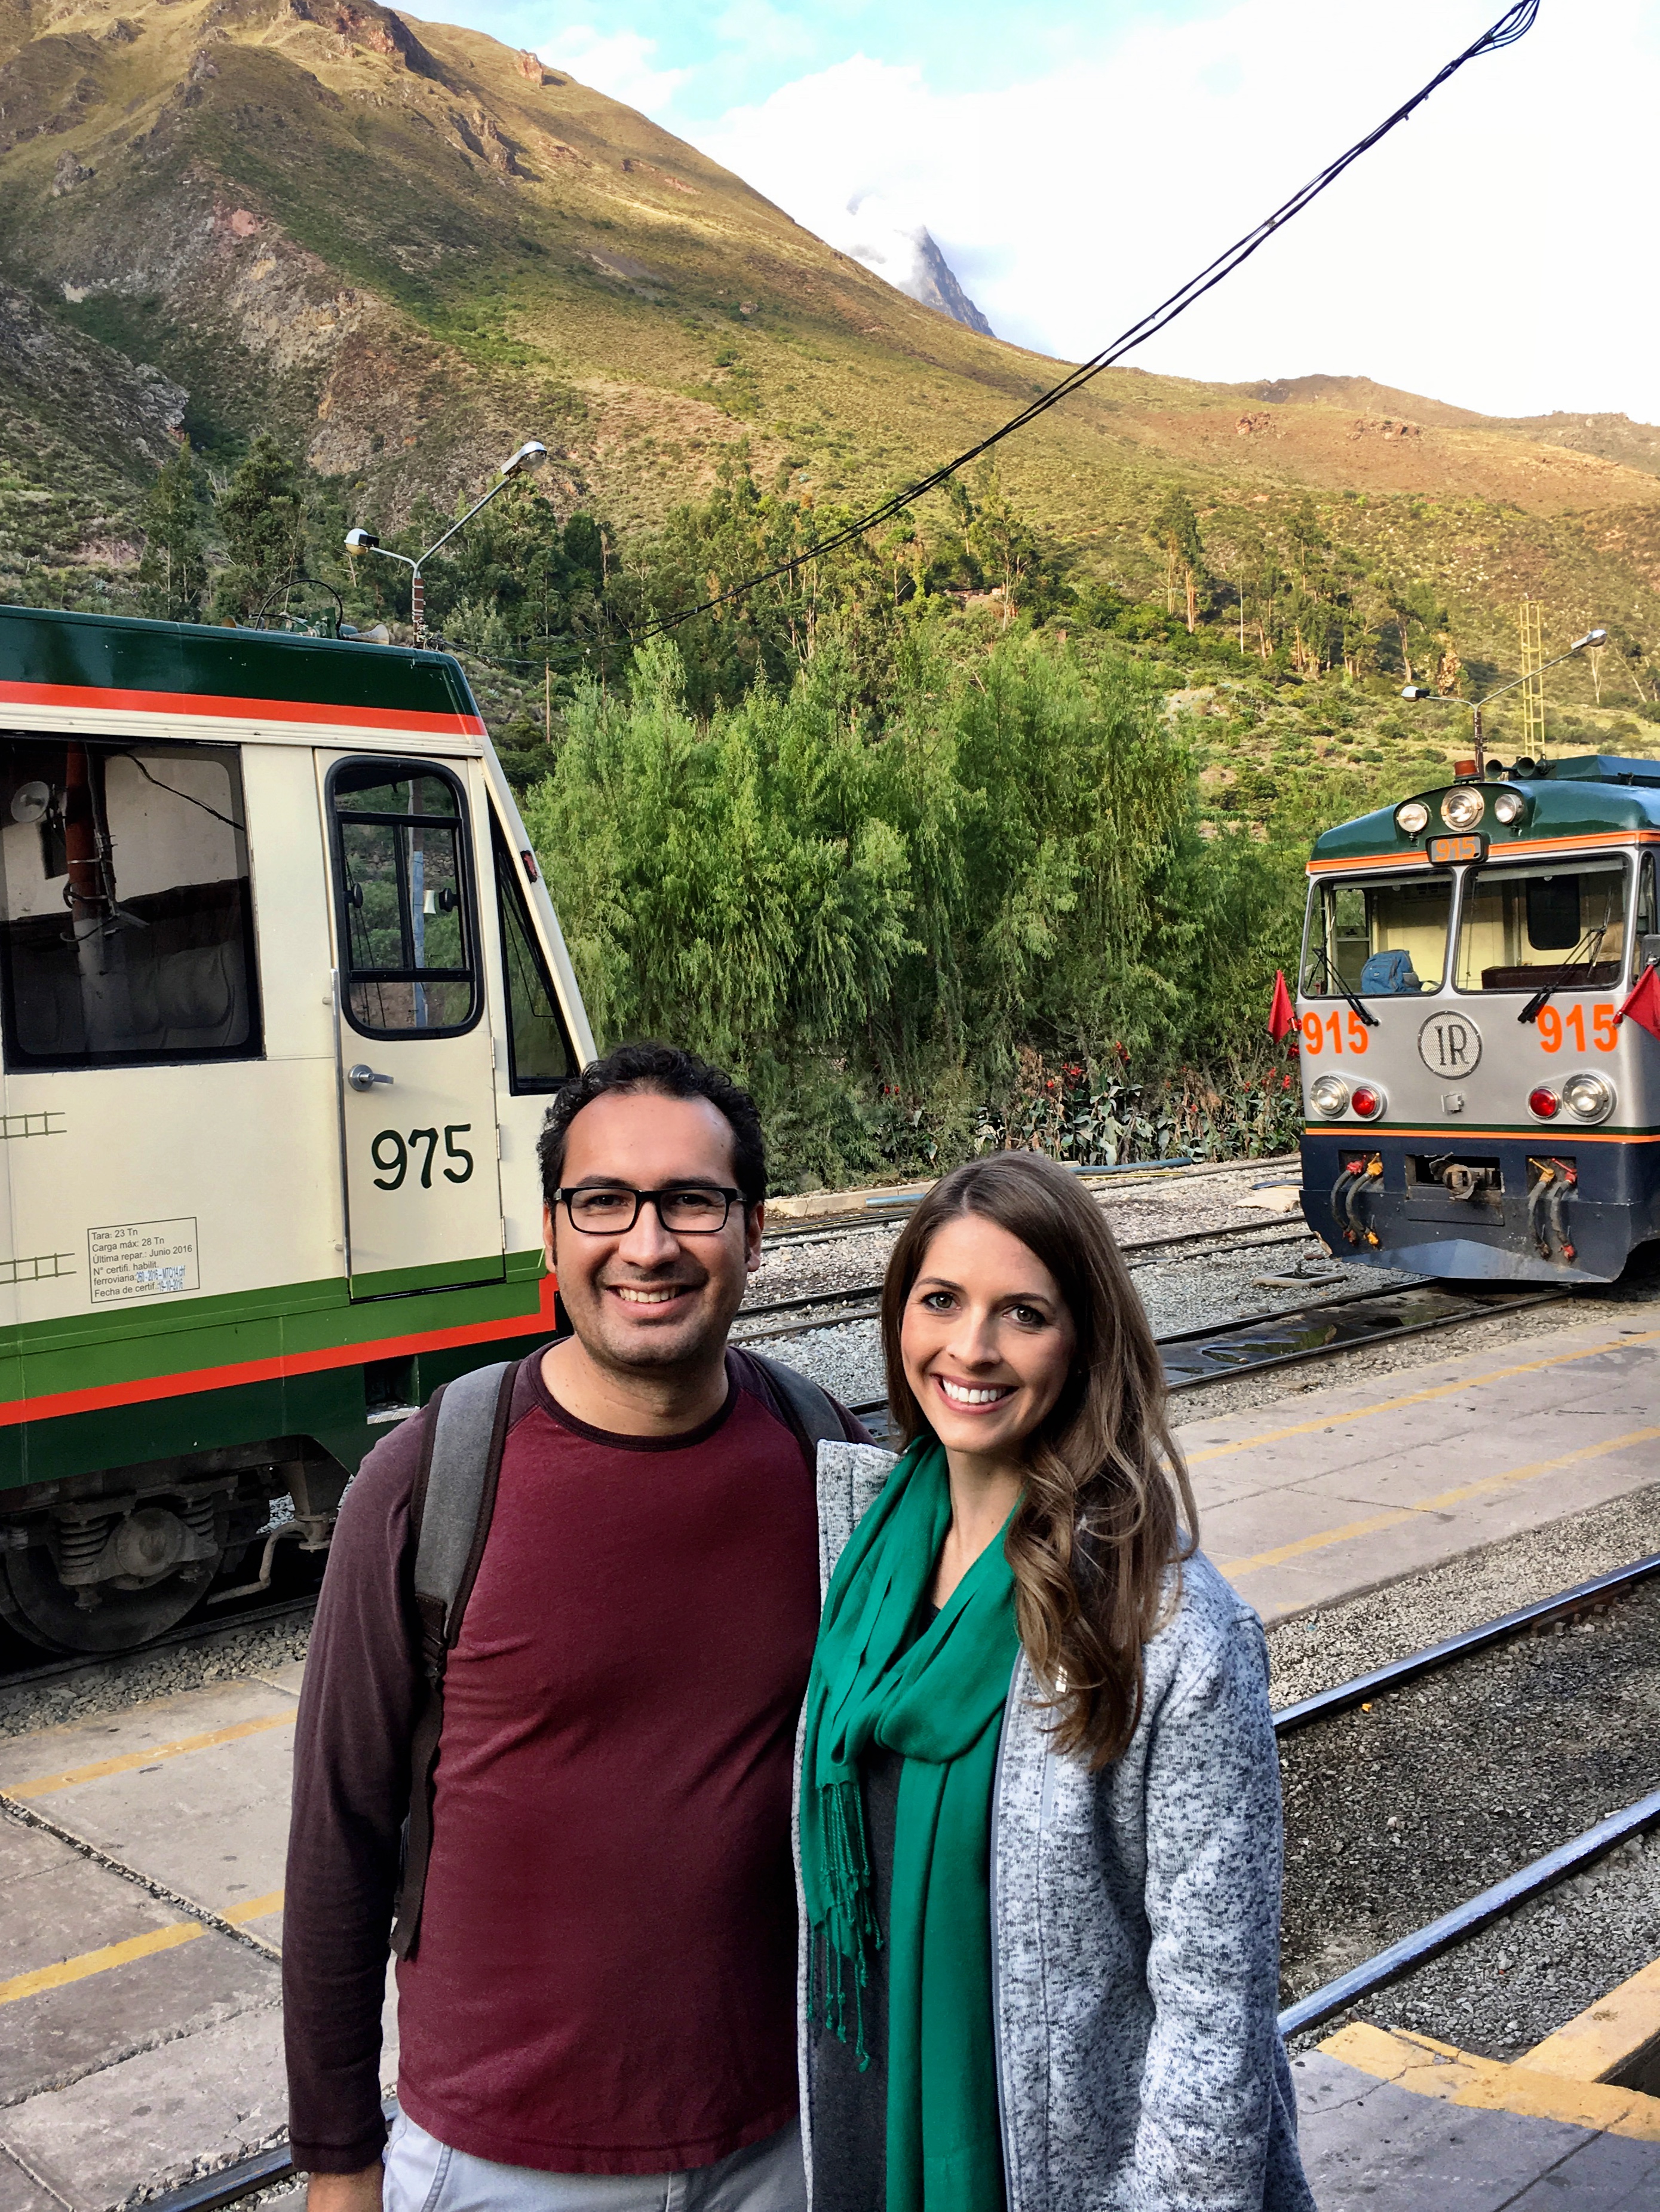 Taking the Train to Machu Picchu